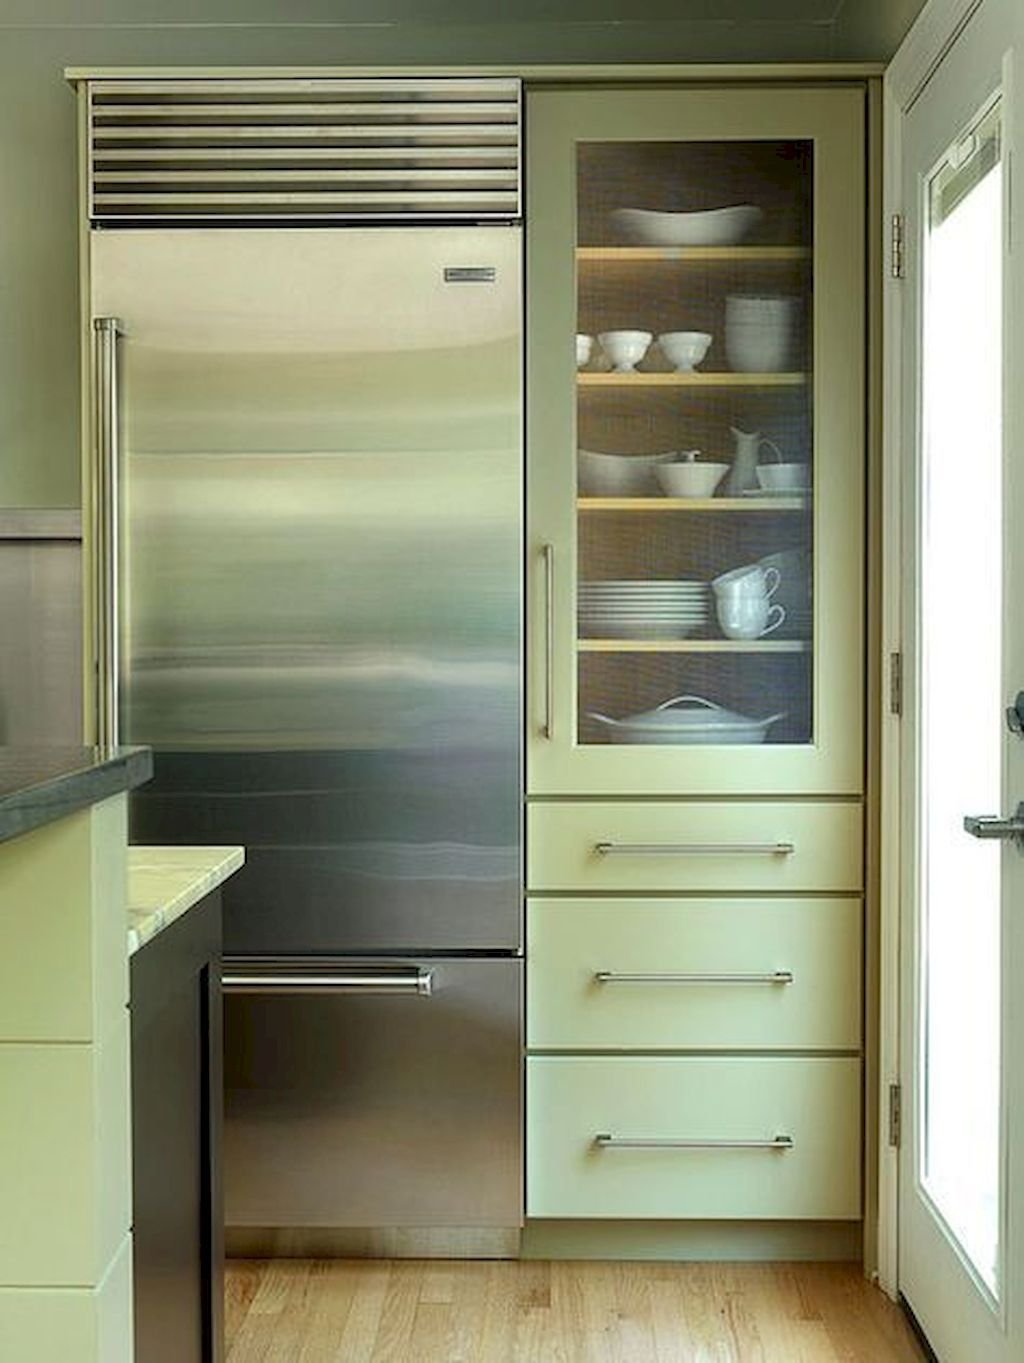 Шкаф над холодильником в кухне фото